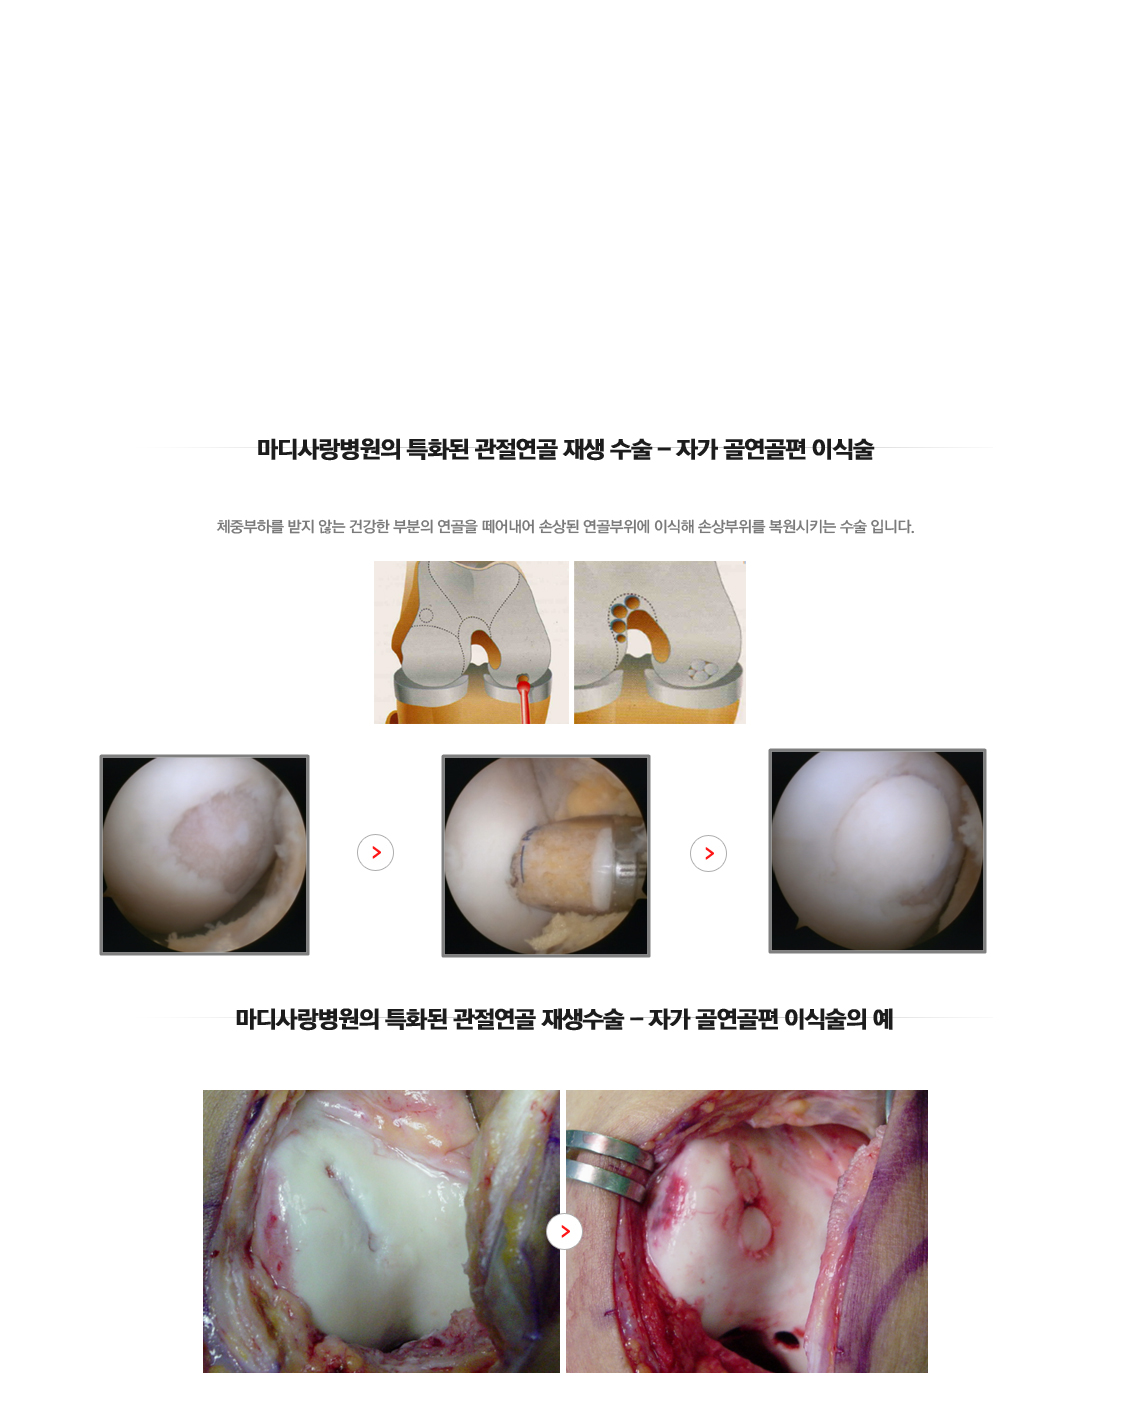 Articular Cartilage Regeneration